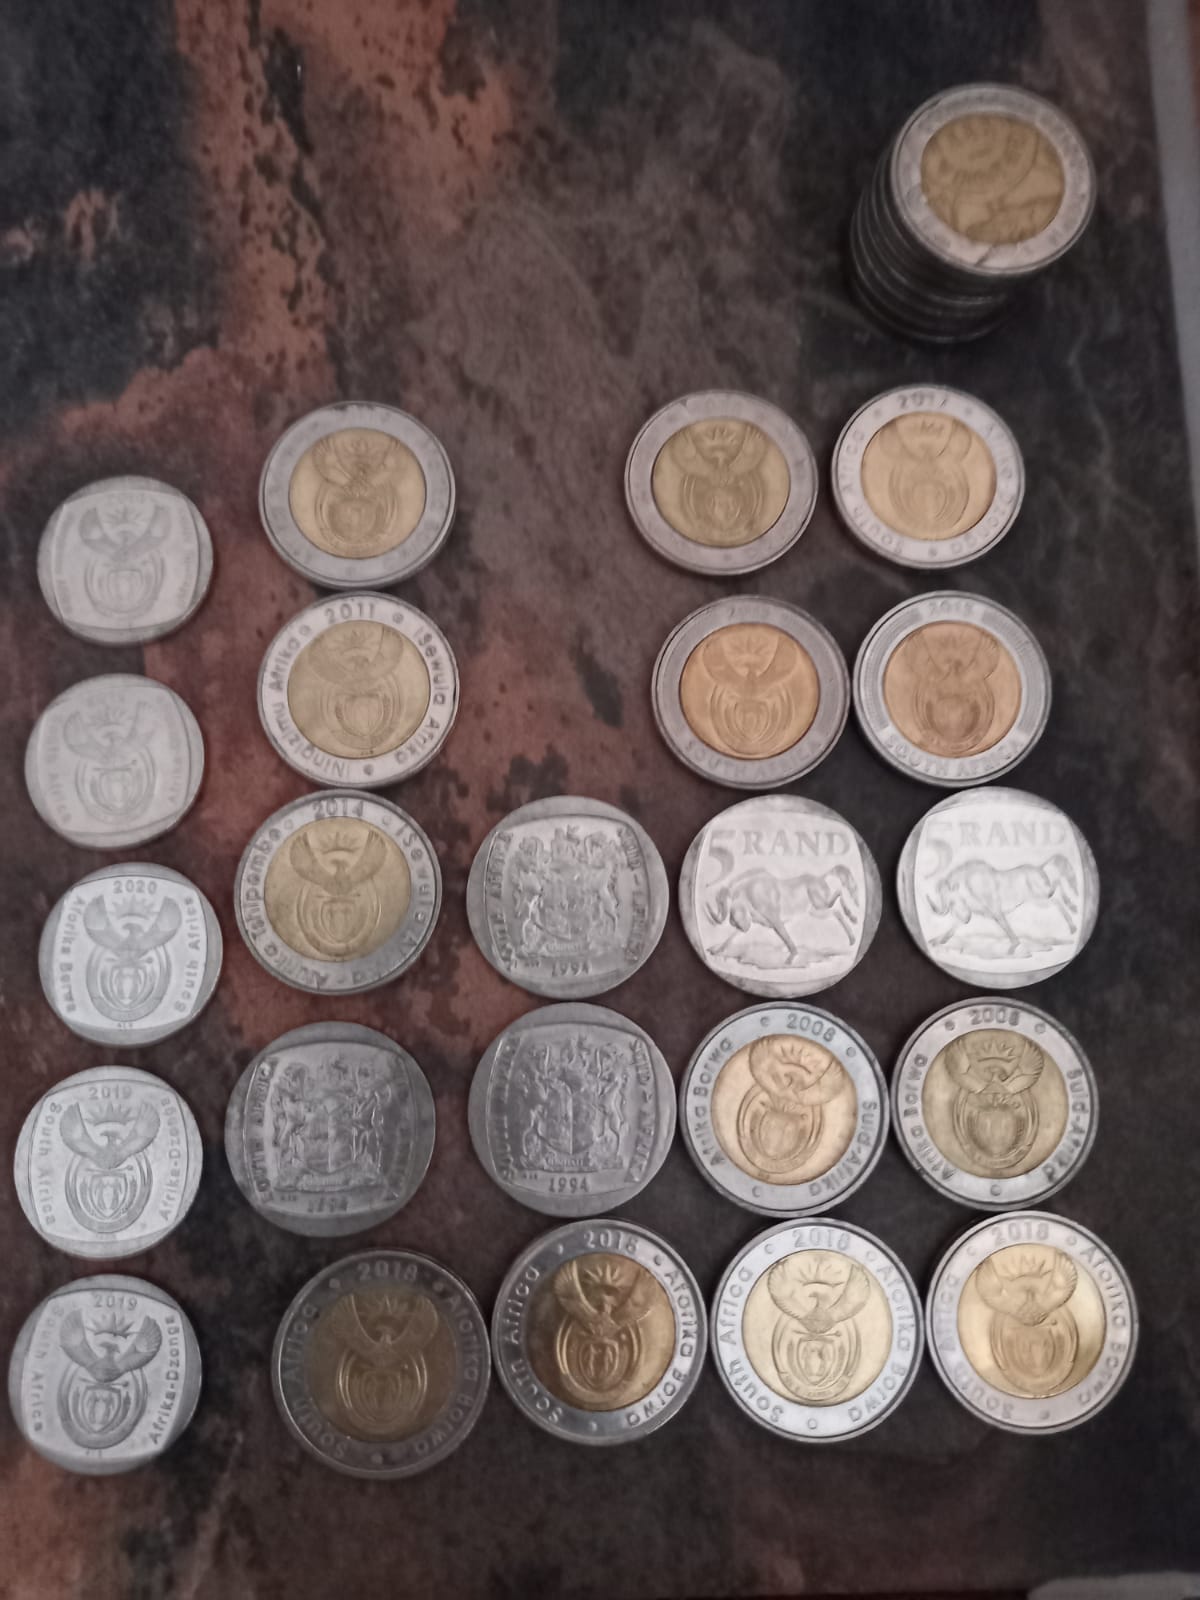 Mandela 5rand coins, all for ten thousand rand, whatsap zero609five73two83 